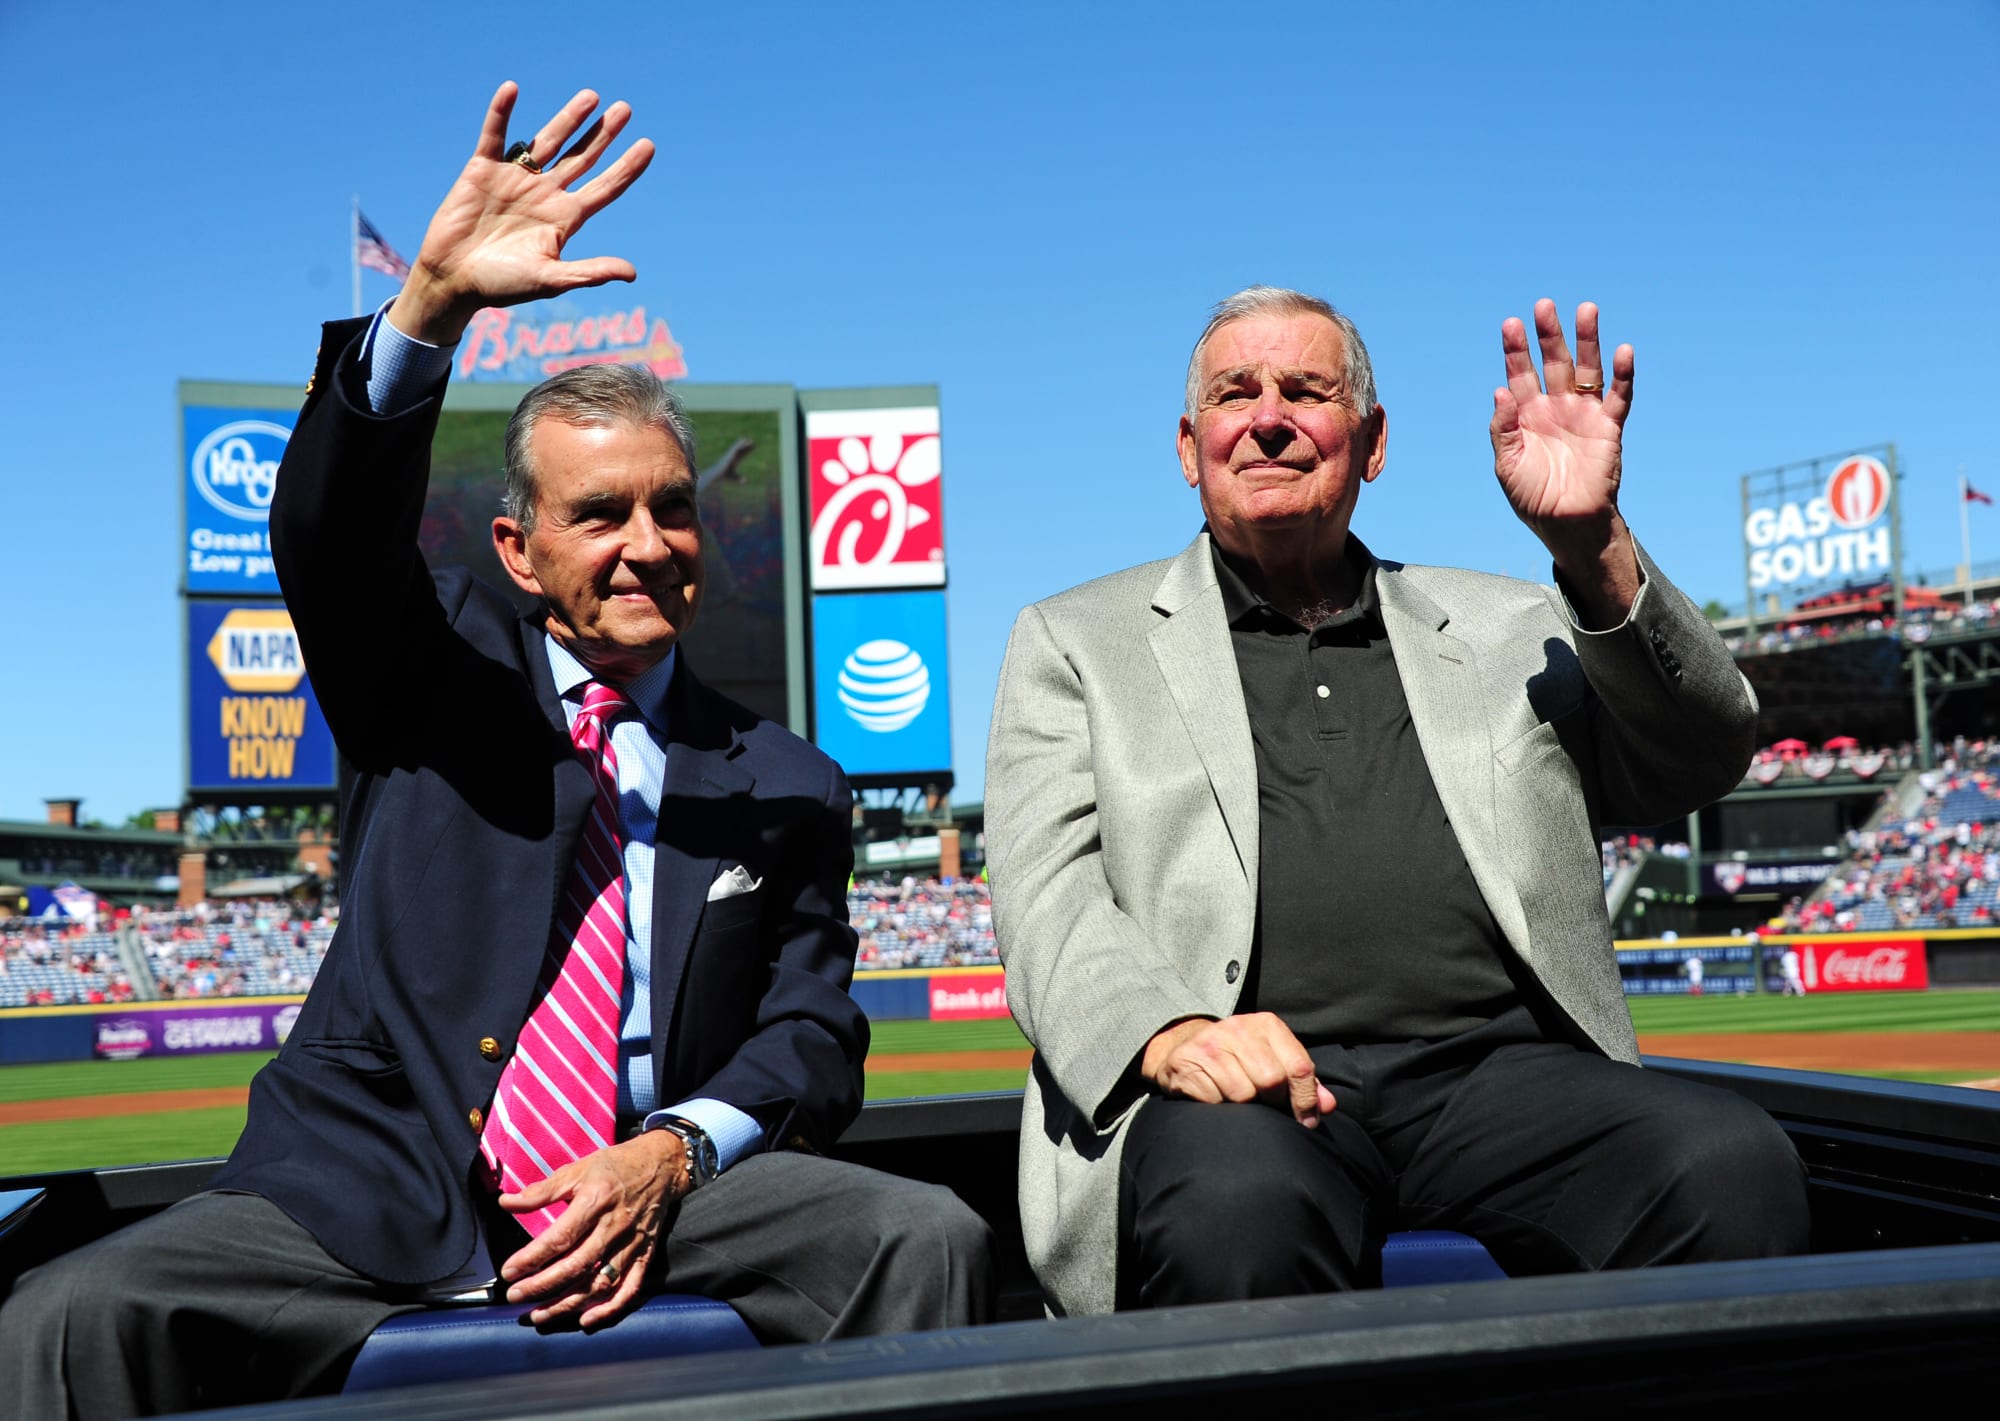 Atlanta Braves - Braves president John Schuerholz displays his